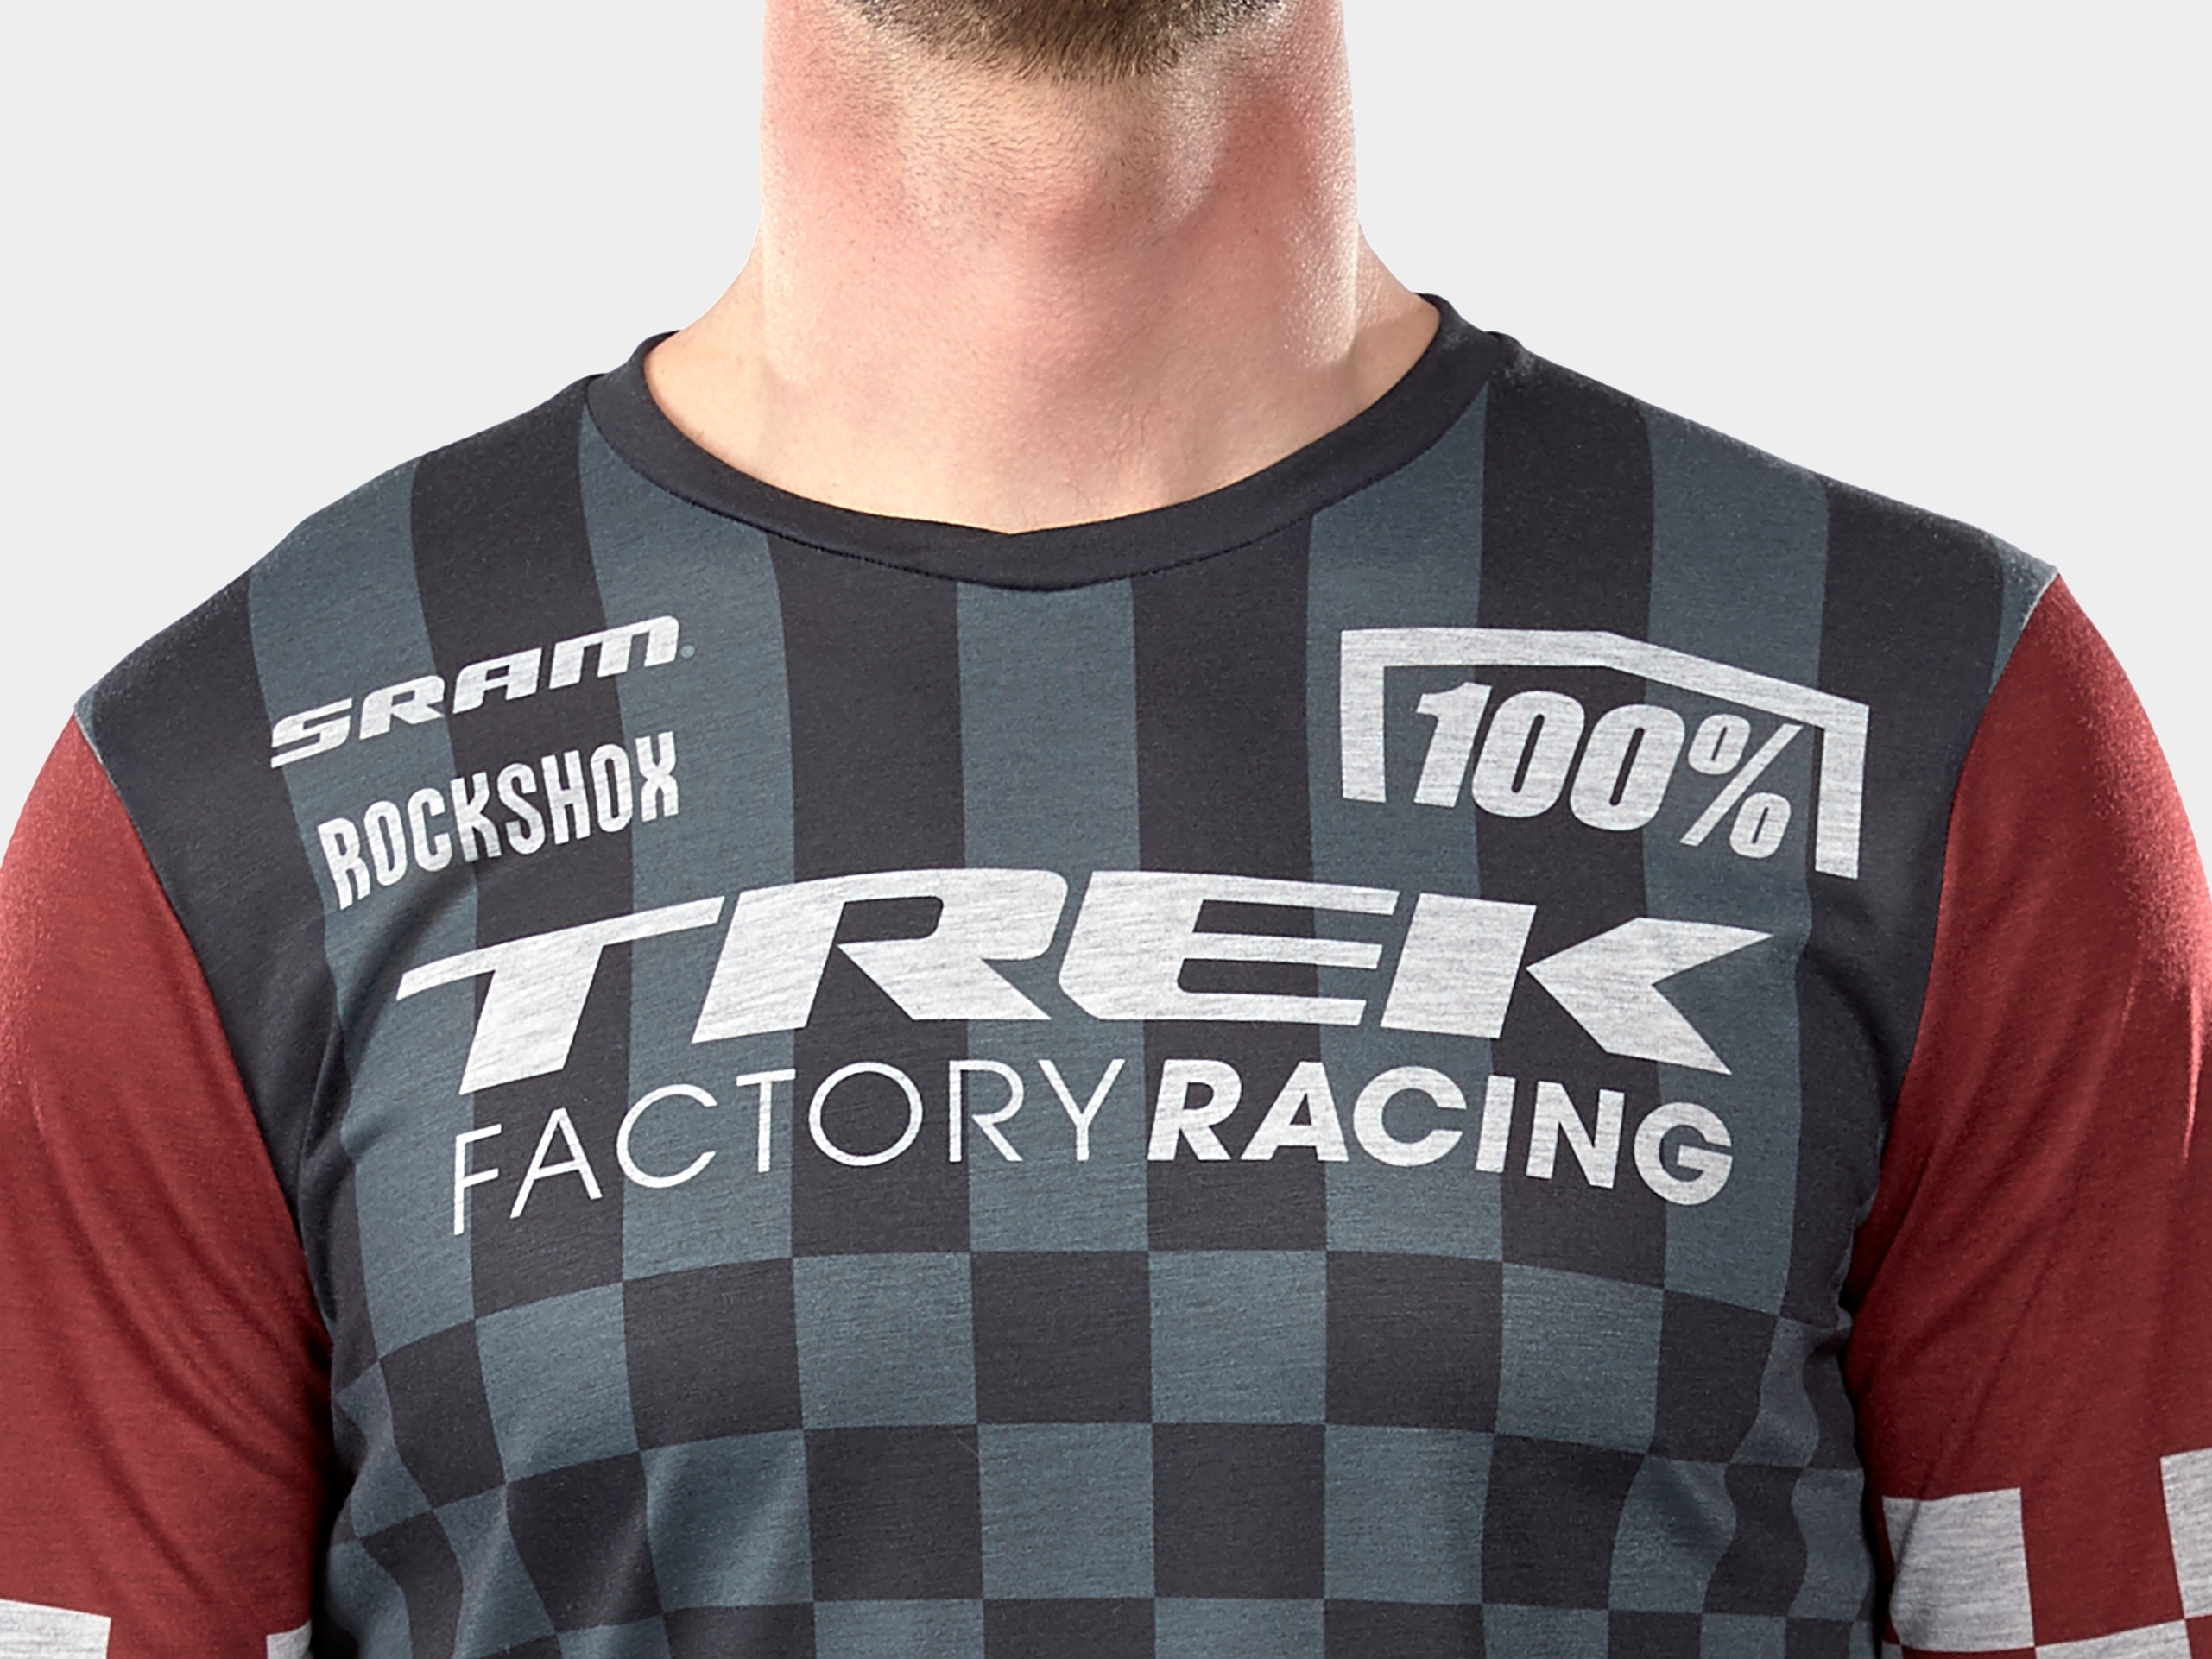 trek factory racing t shirt